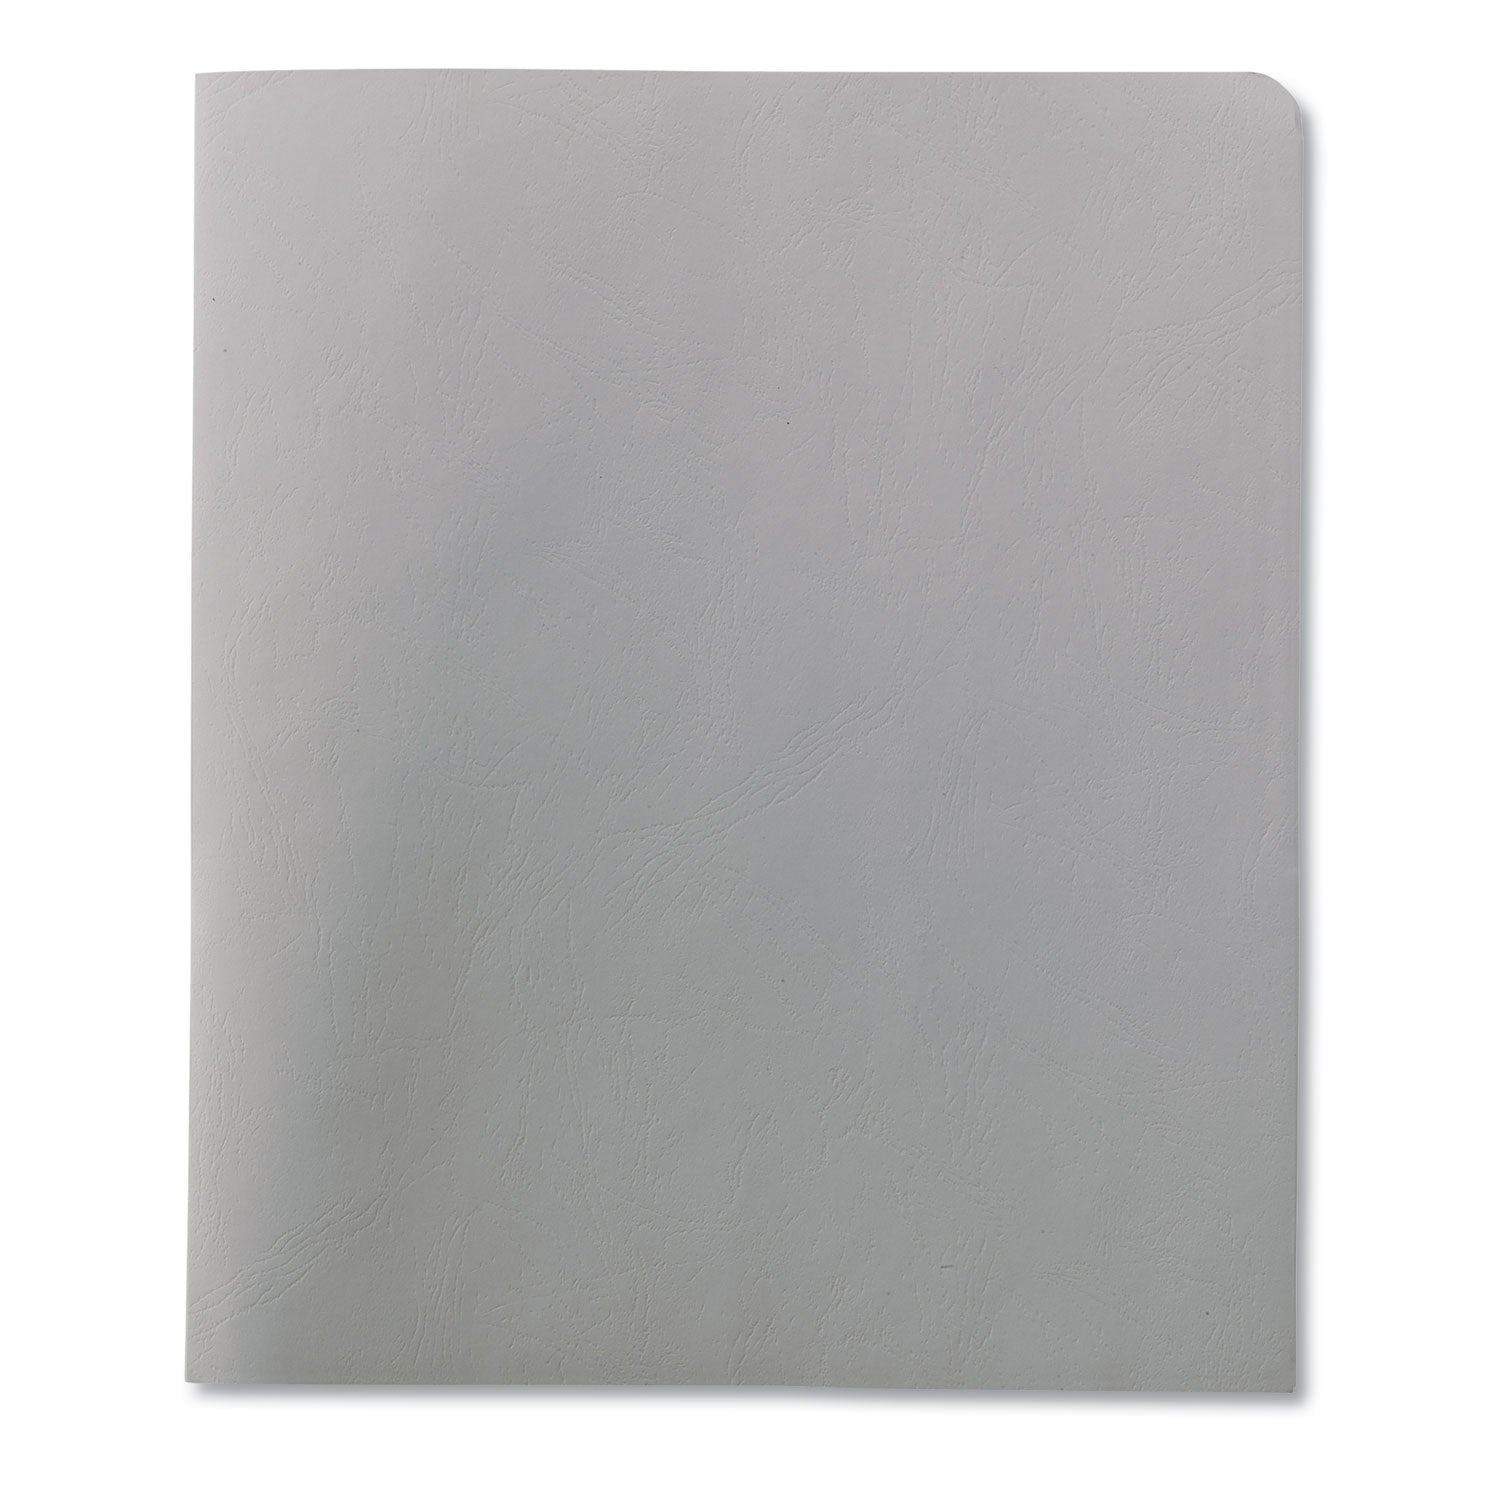 Two-Pocket Folder, Textured Paper, 100-Sheet Capacity, 11 x 8.5, White, 25/Box - 